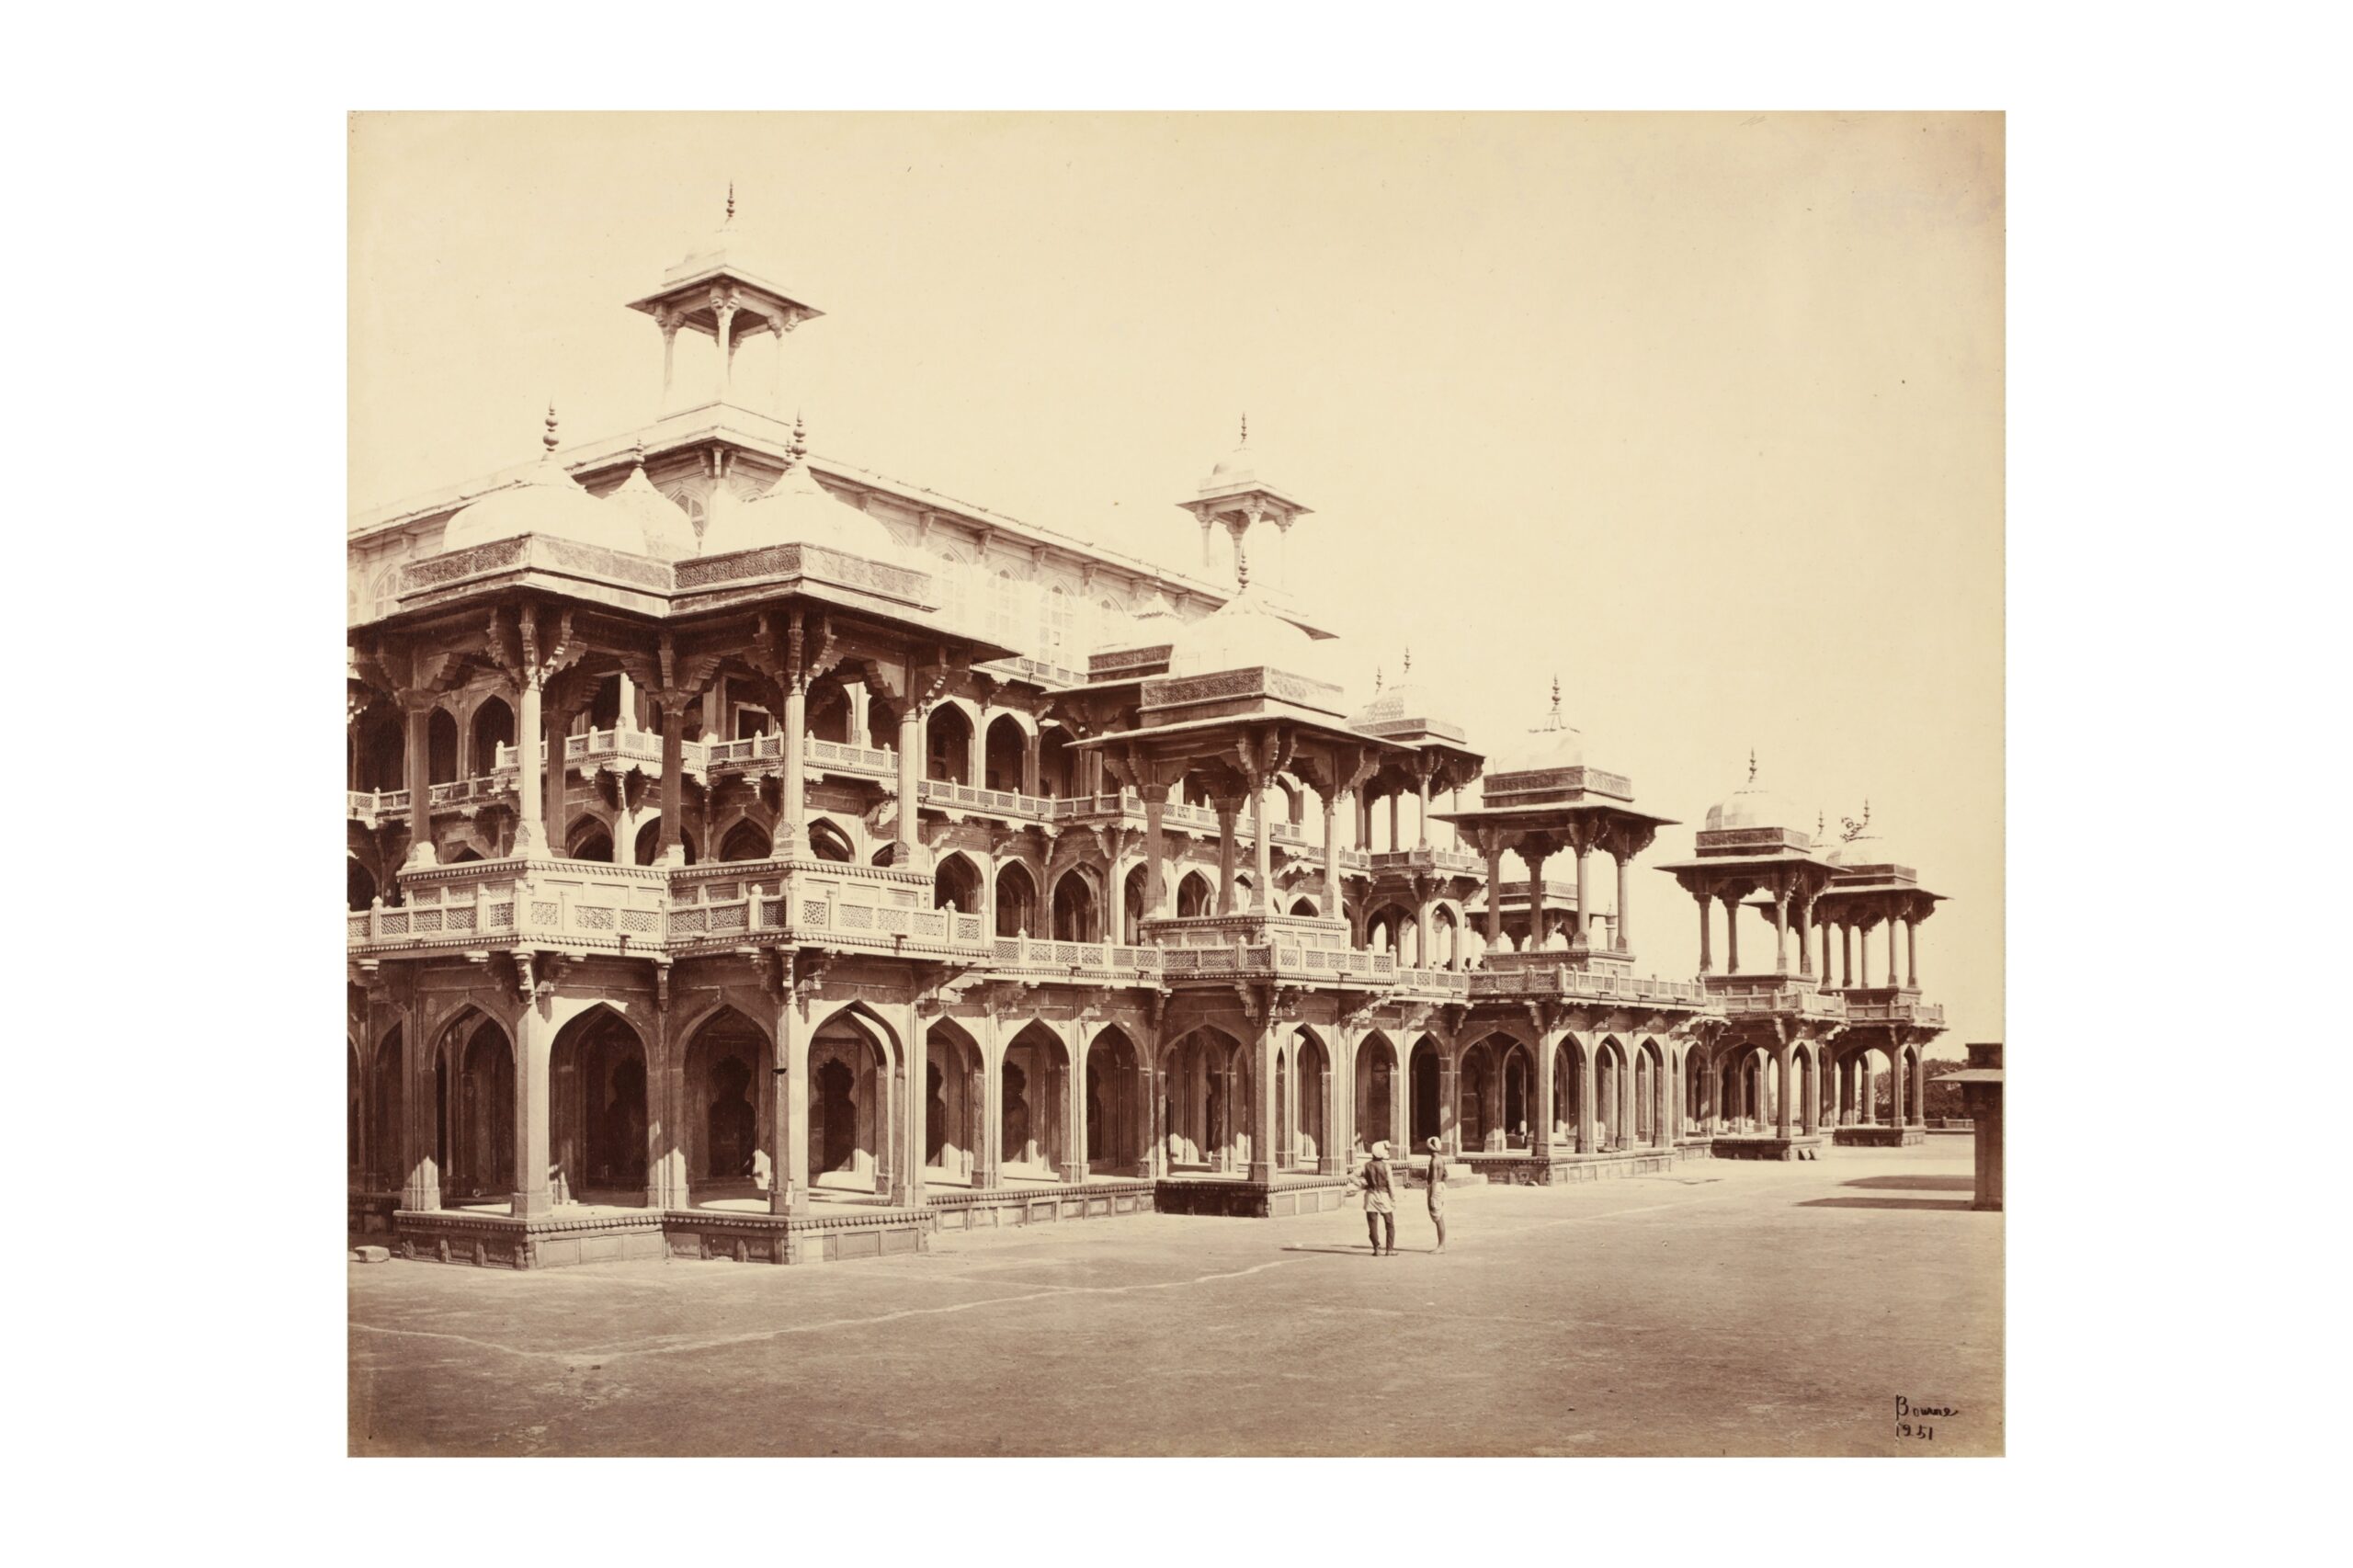 Lot 546. VIEWS OF INDIA BY SAMUEL BOURNE (1834 - 1912) ca. 1865 - 1866. Estimate £400 - £600